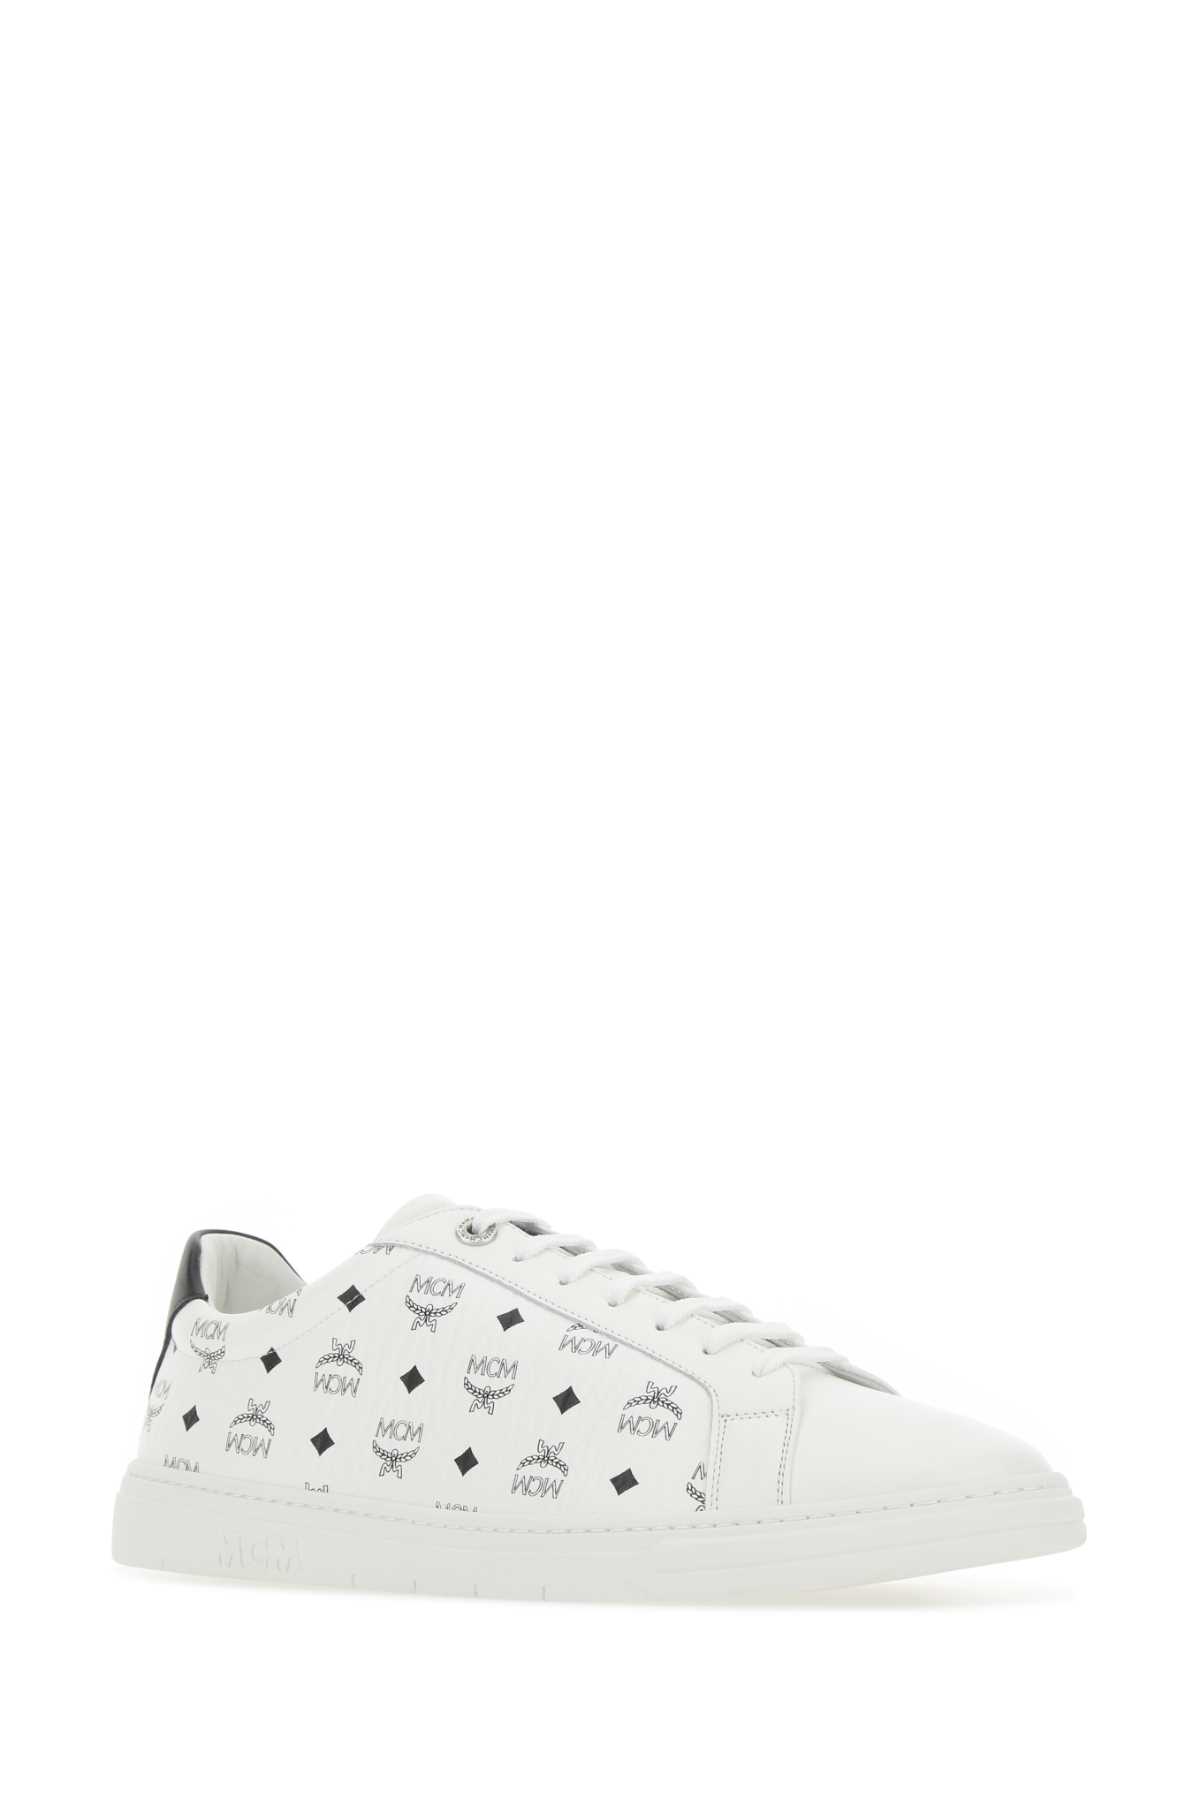 Shop Mcm Printed Canvas Terrain Sneakers In White